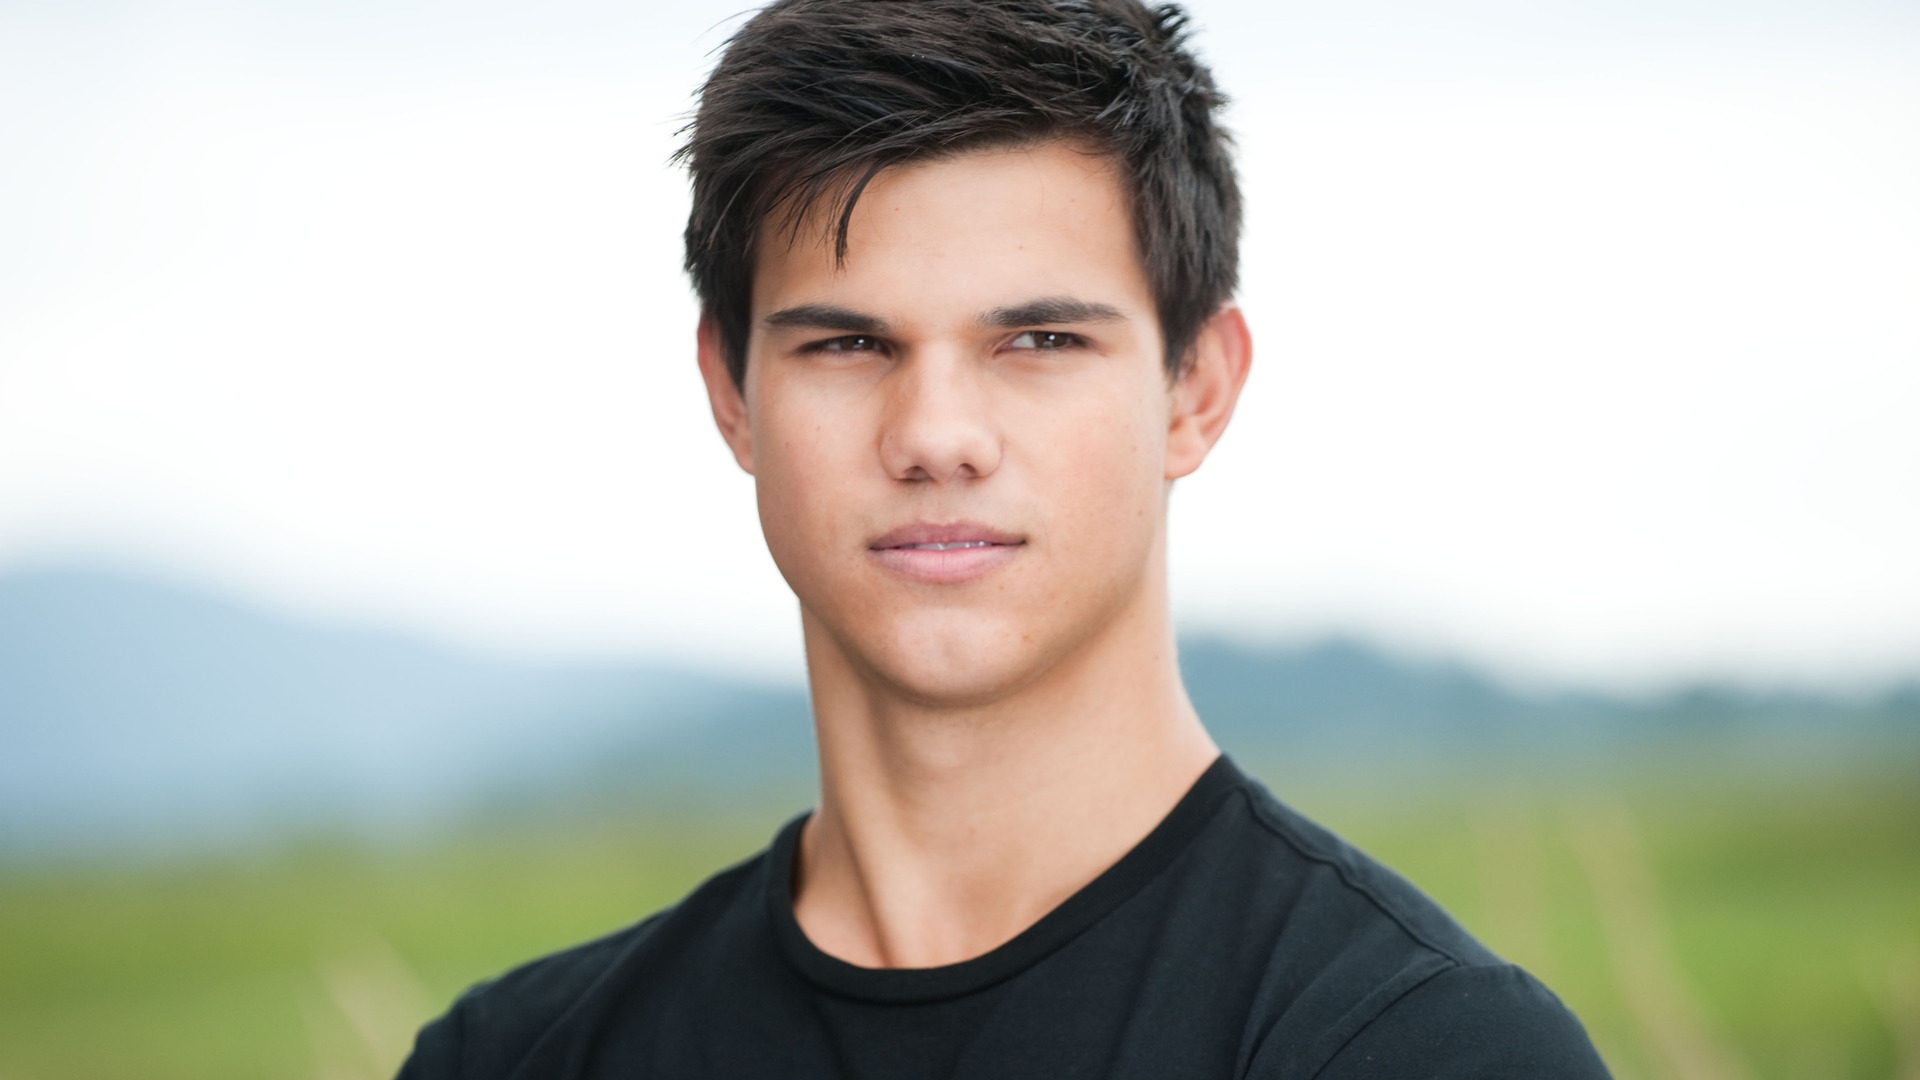 Taylor Lautner image